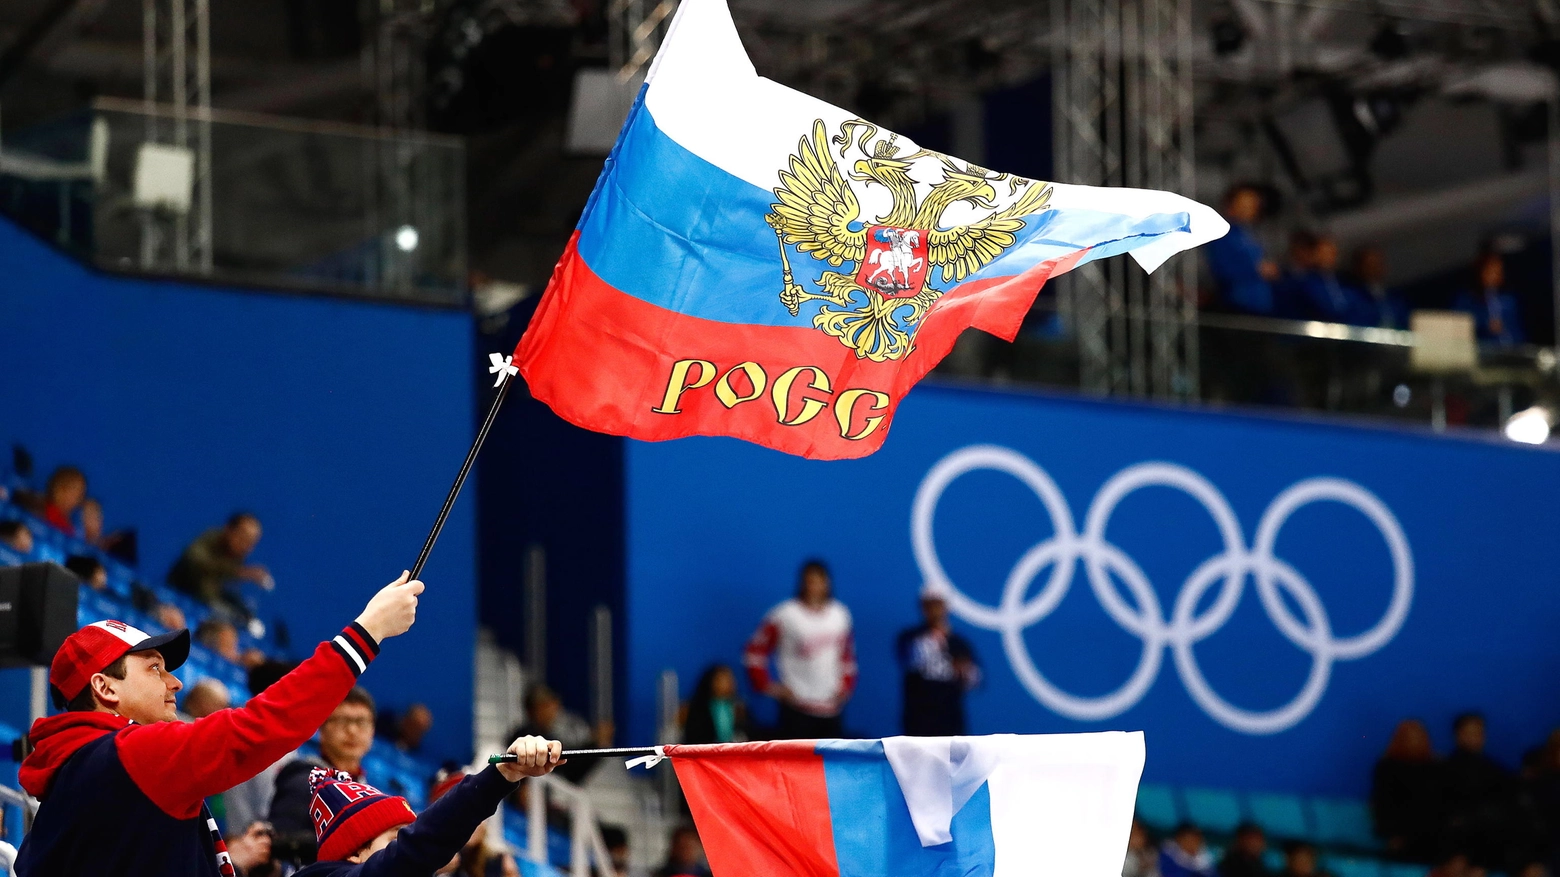 Tifosi alle Olimpiadi sventolano la bandiera russa (Ansa)